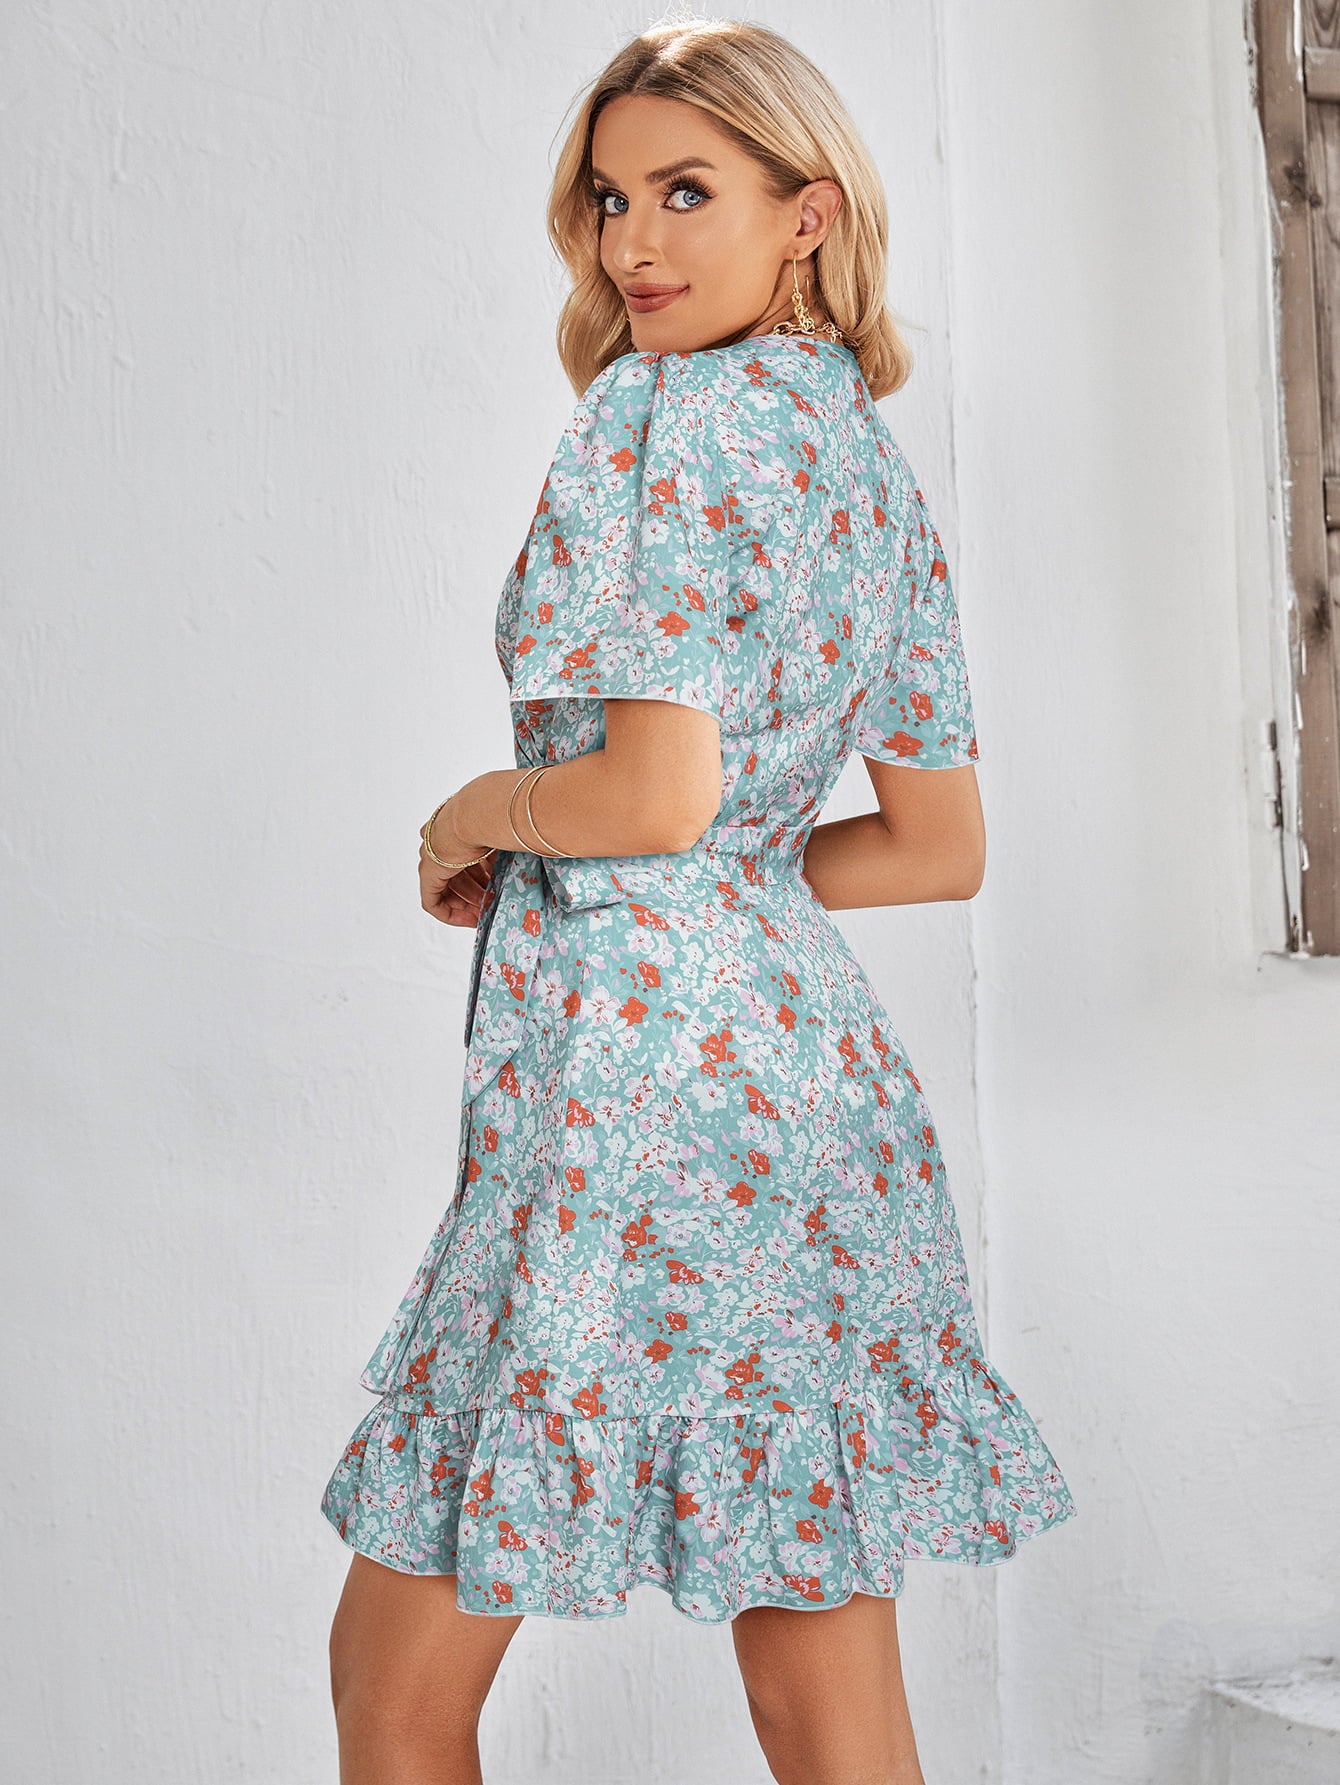 Floral Short Sleeve Ruffle Hem Dress - Online Only